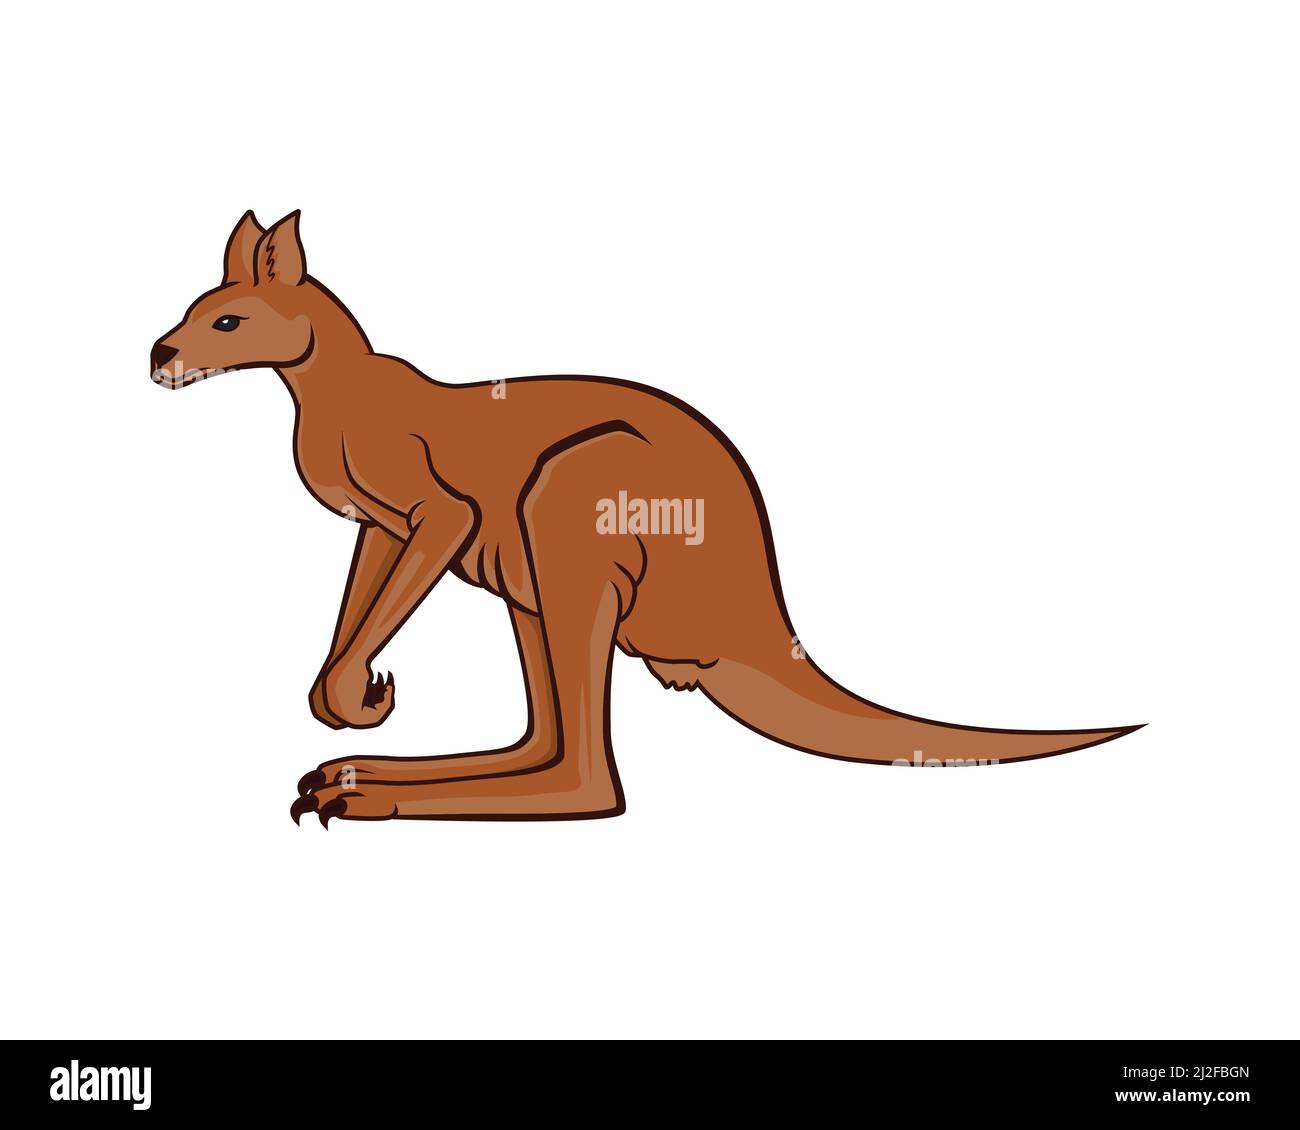 Detailed Standing Kangaroo Illustration the Indigenous Fauna to Australia Vector Stock Vector